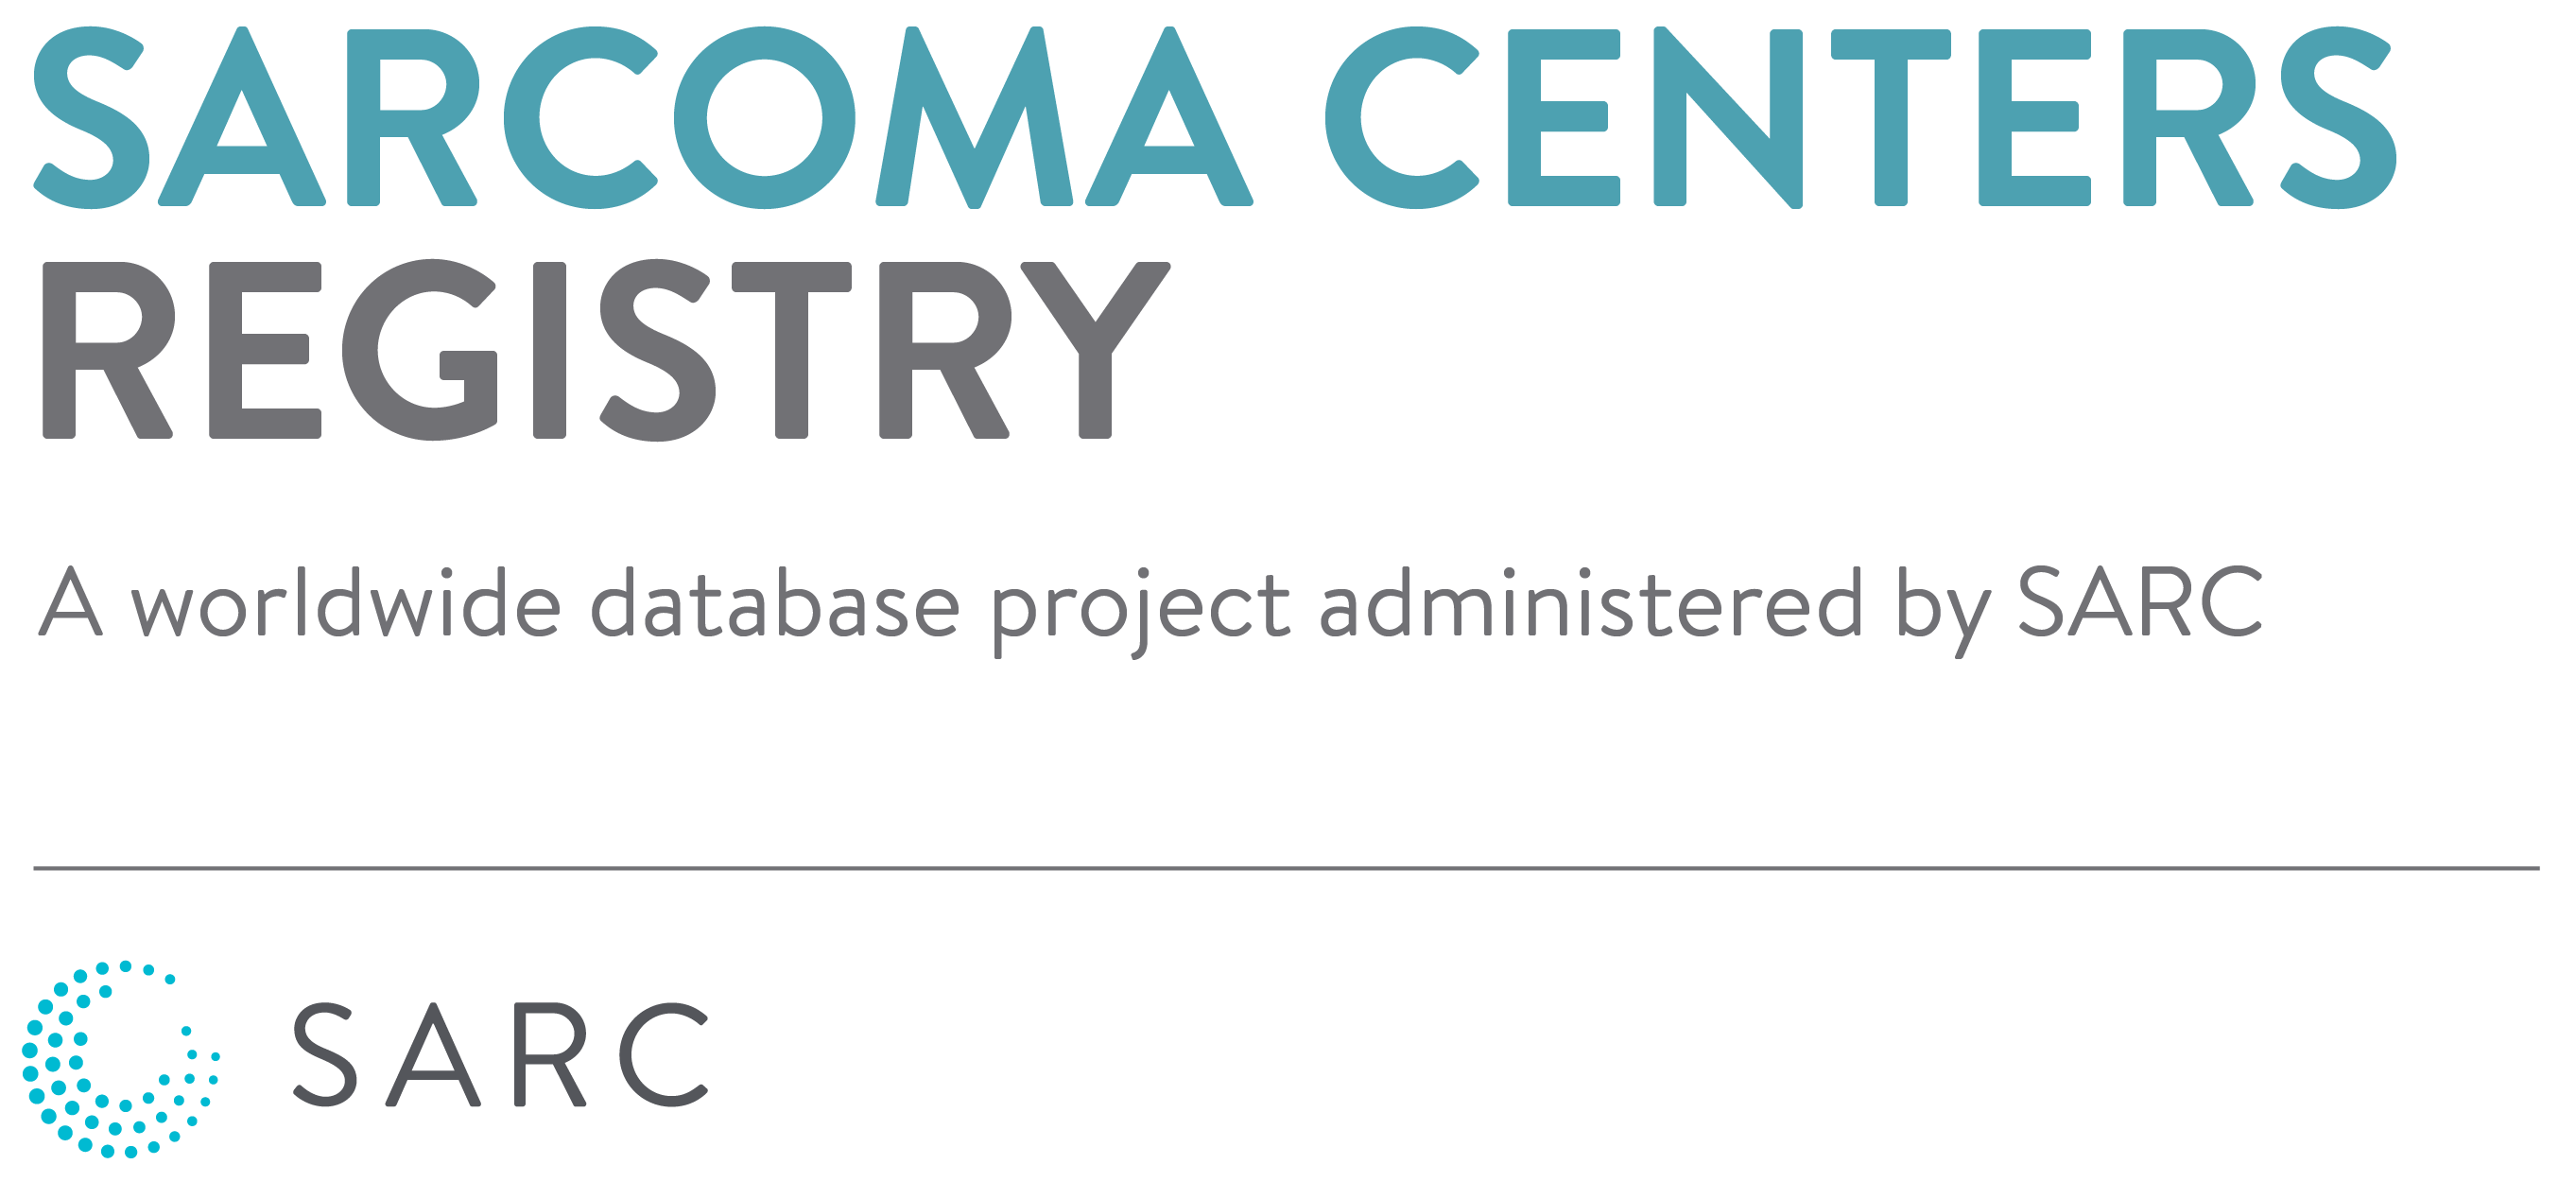 Sarcoma Centers Registry